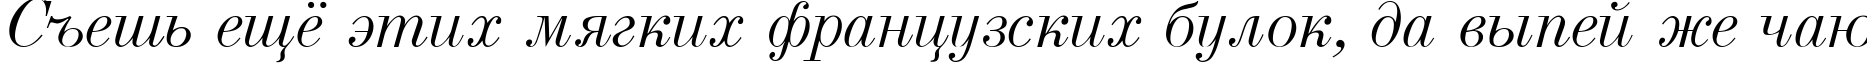 Пример написания шрифтом Usual New Italic текста на русском